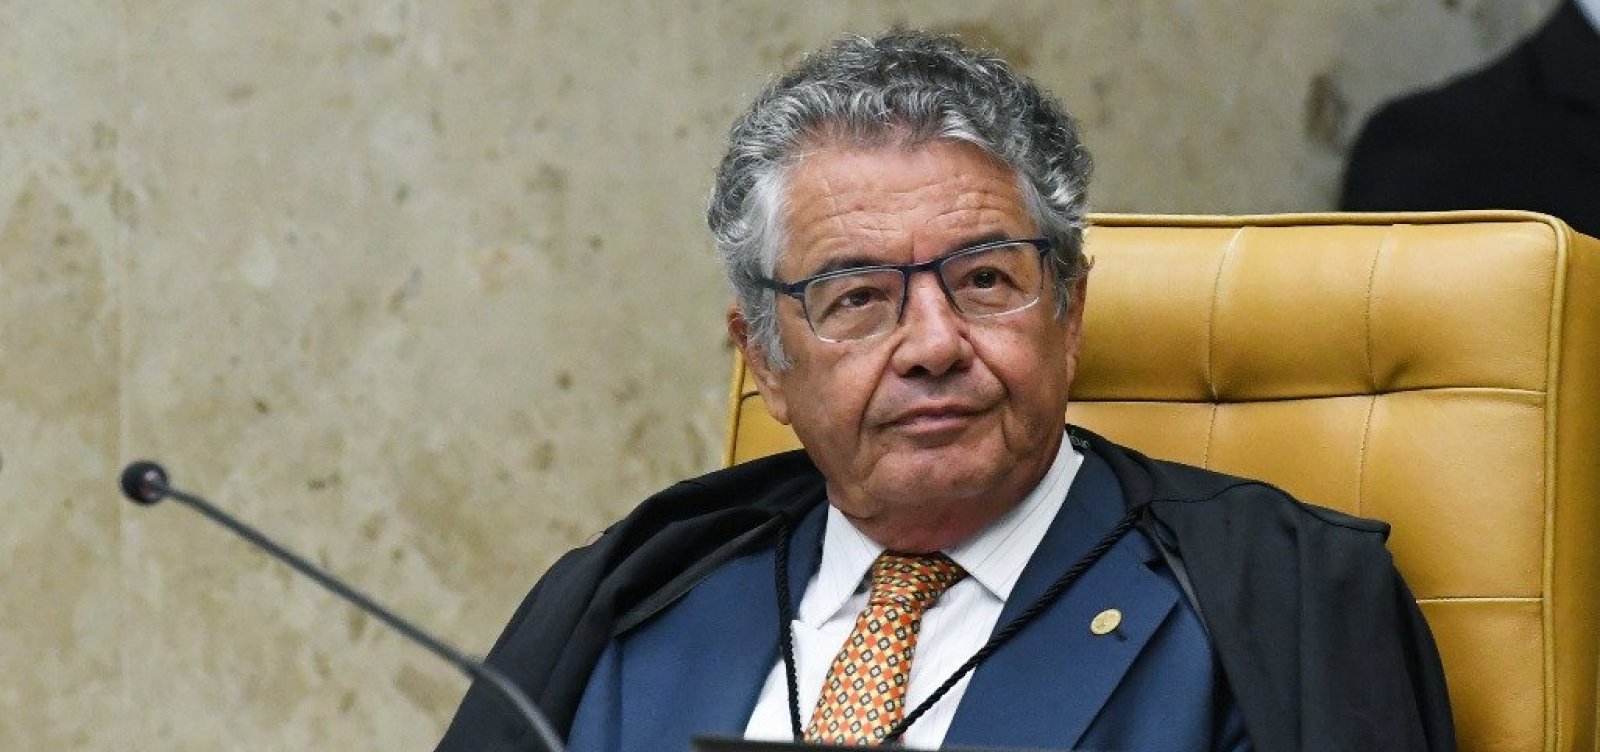 Câmara vai 'virar as costas ao povo brasileiro' se revogar a prisão de Daniel Silveira, diz Marco Aurélio Mello